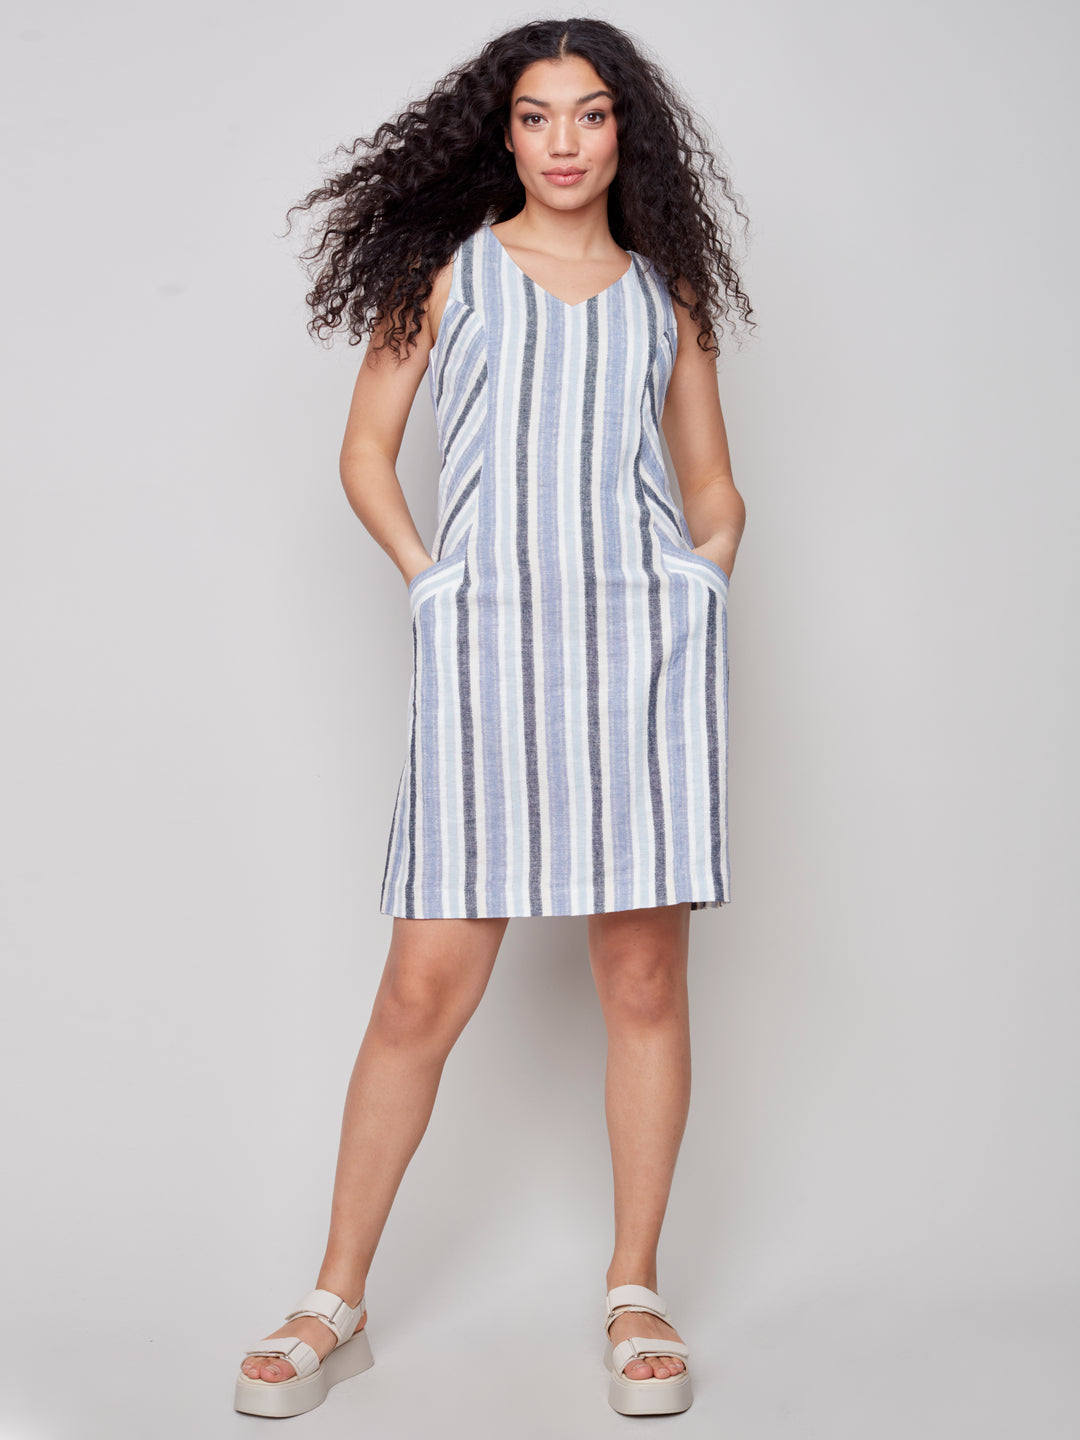 Sleeveless Striped A-Line Dress - Cerulean -C3115 571B